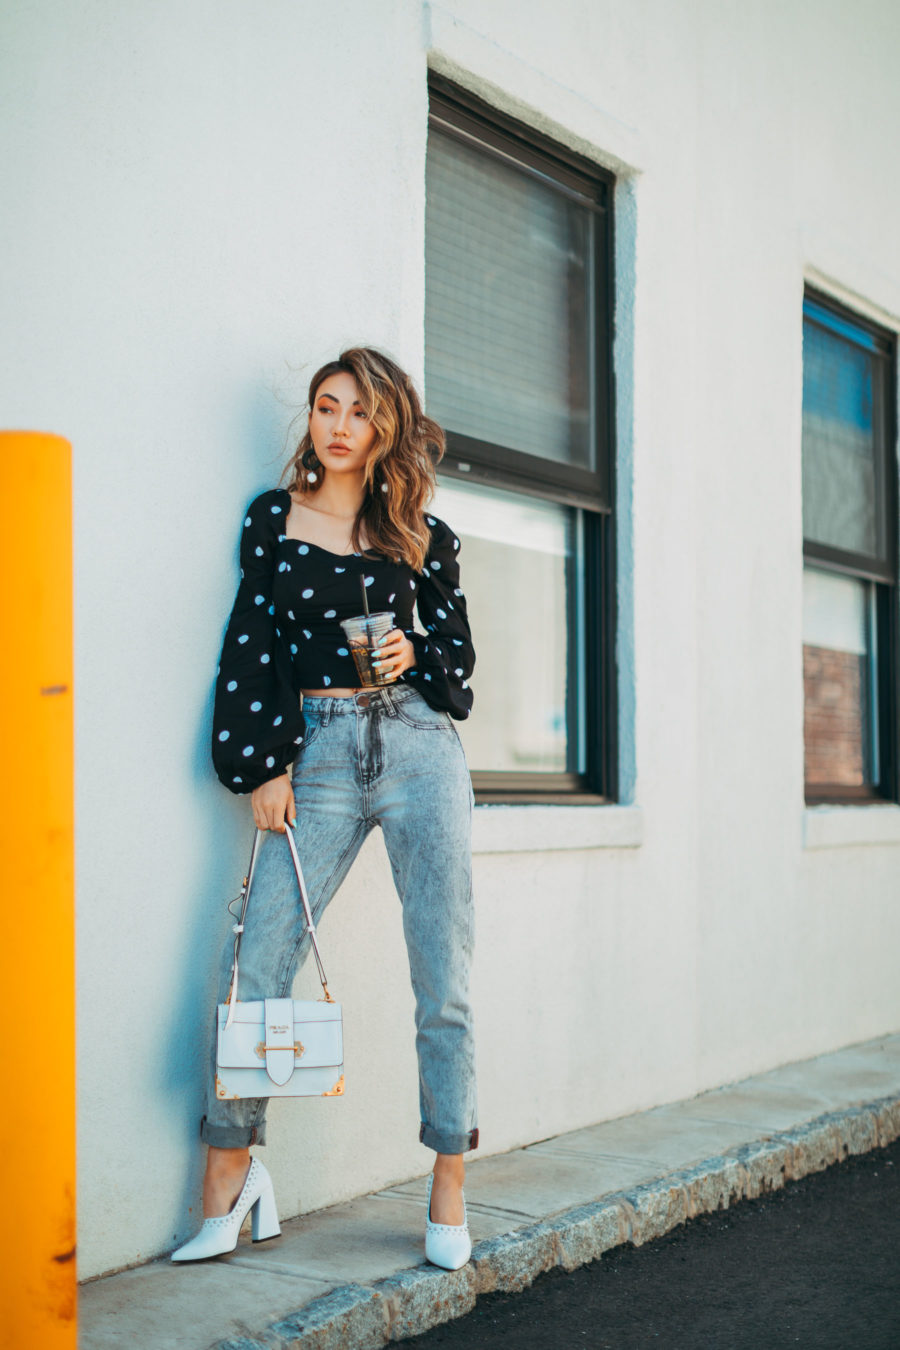 How to Style Square Neckline Pieces - polka dot blouse, boyfriend jeans, white pumps // Notjessfashion.com